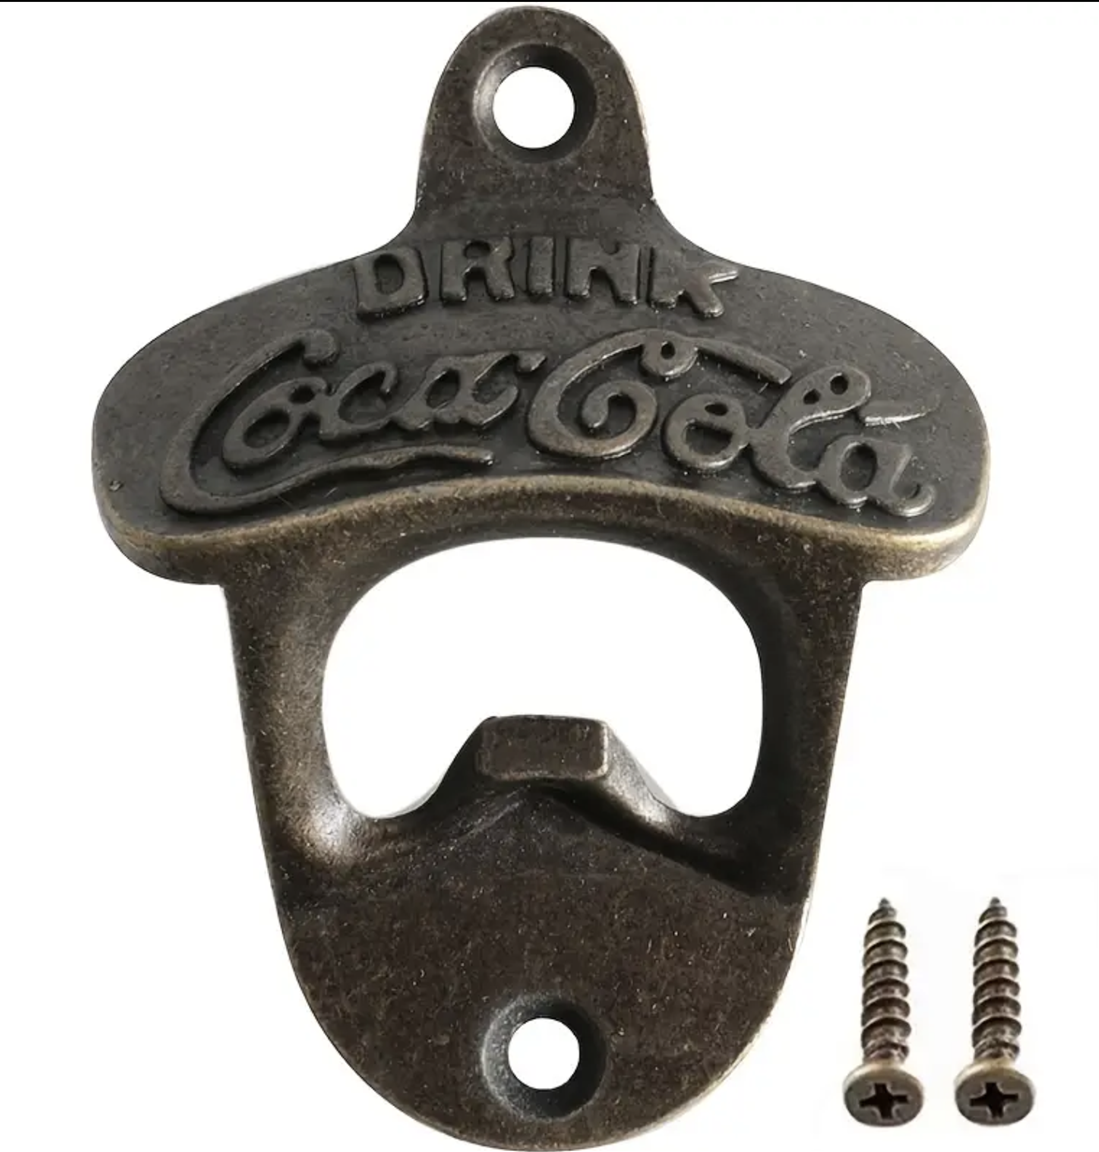 Coca-Cola Stationary Bottle Opener